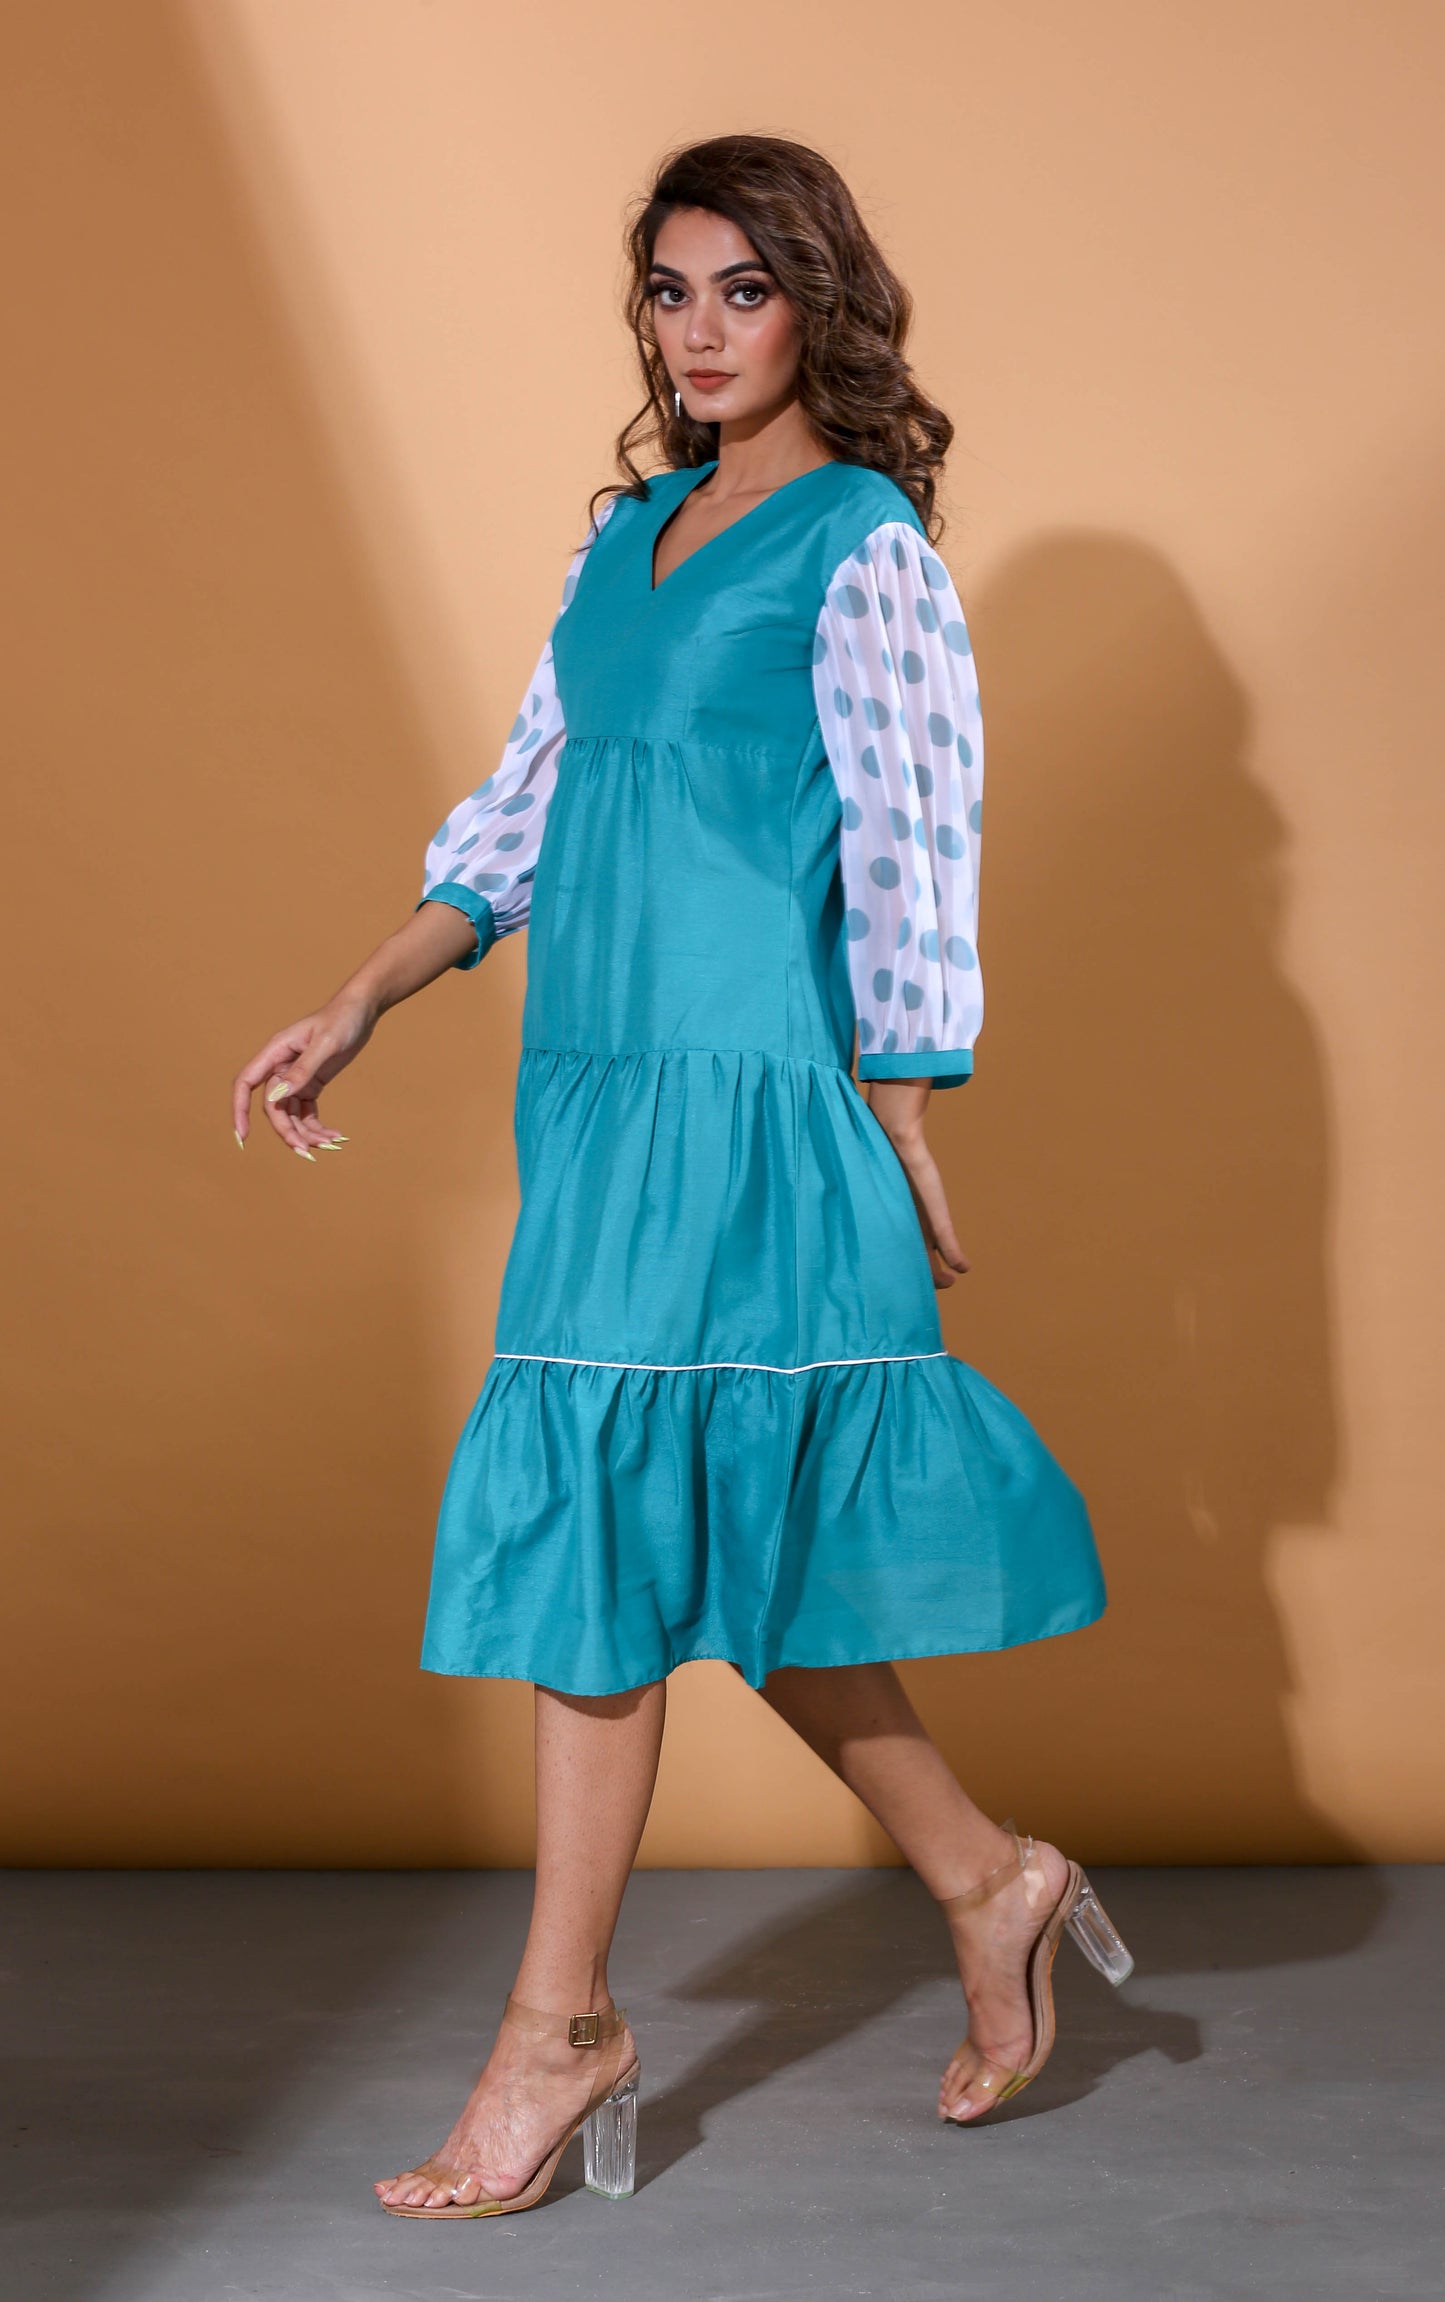 Adhikam- Teal blue tiered dress